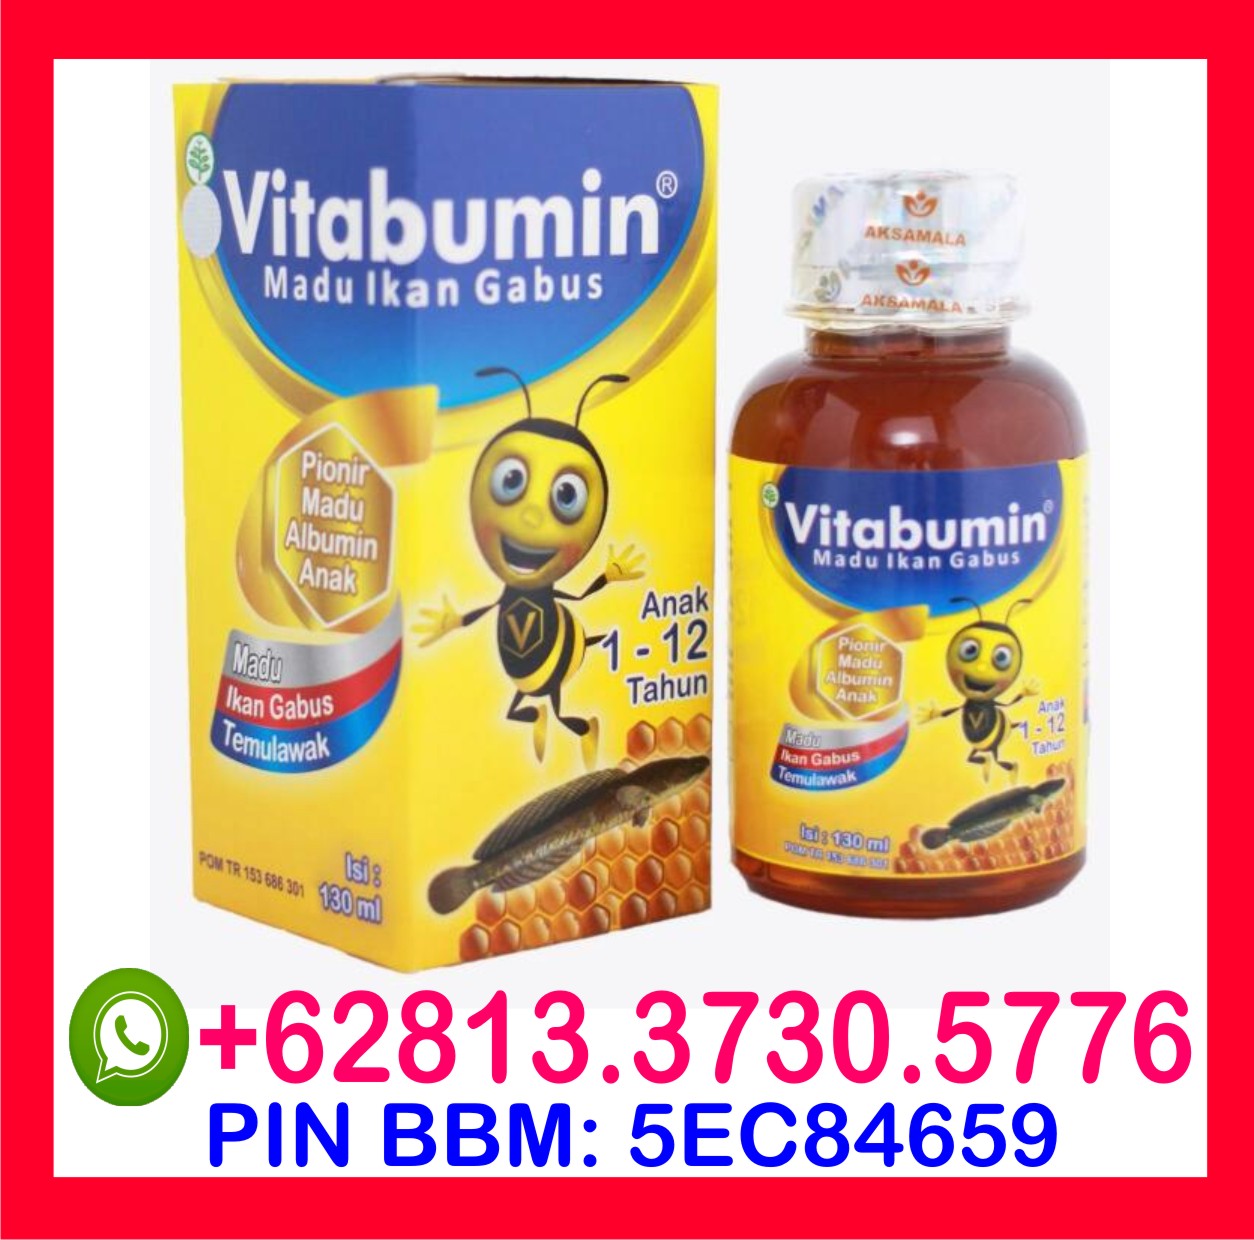 Nutrisi Multivitamin Vitamin  Vitabumin Suplemen 